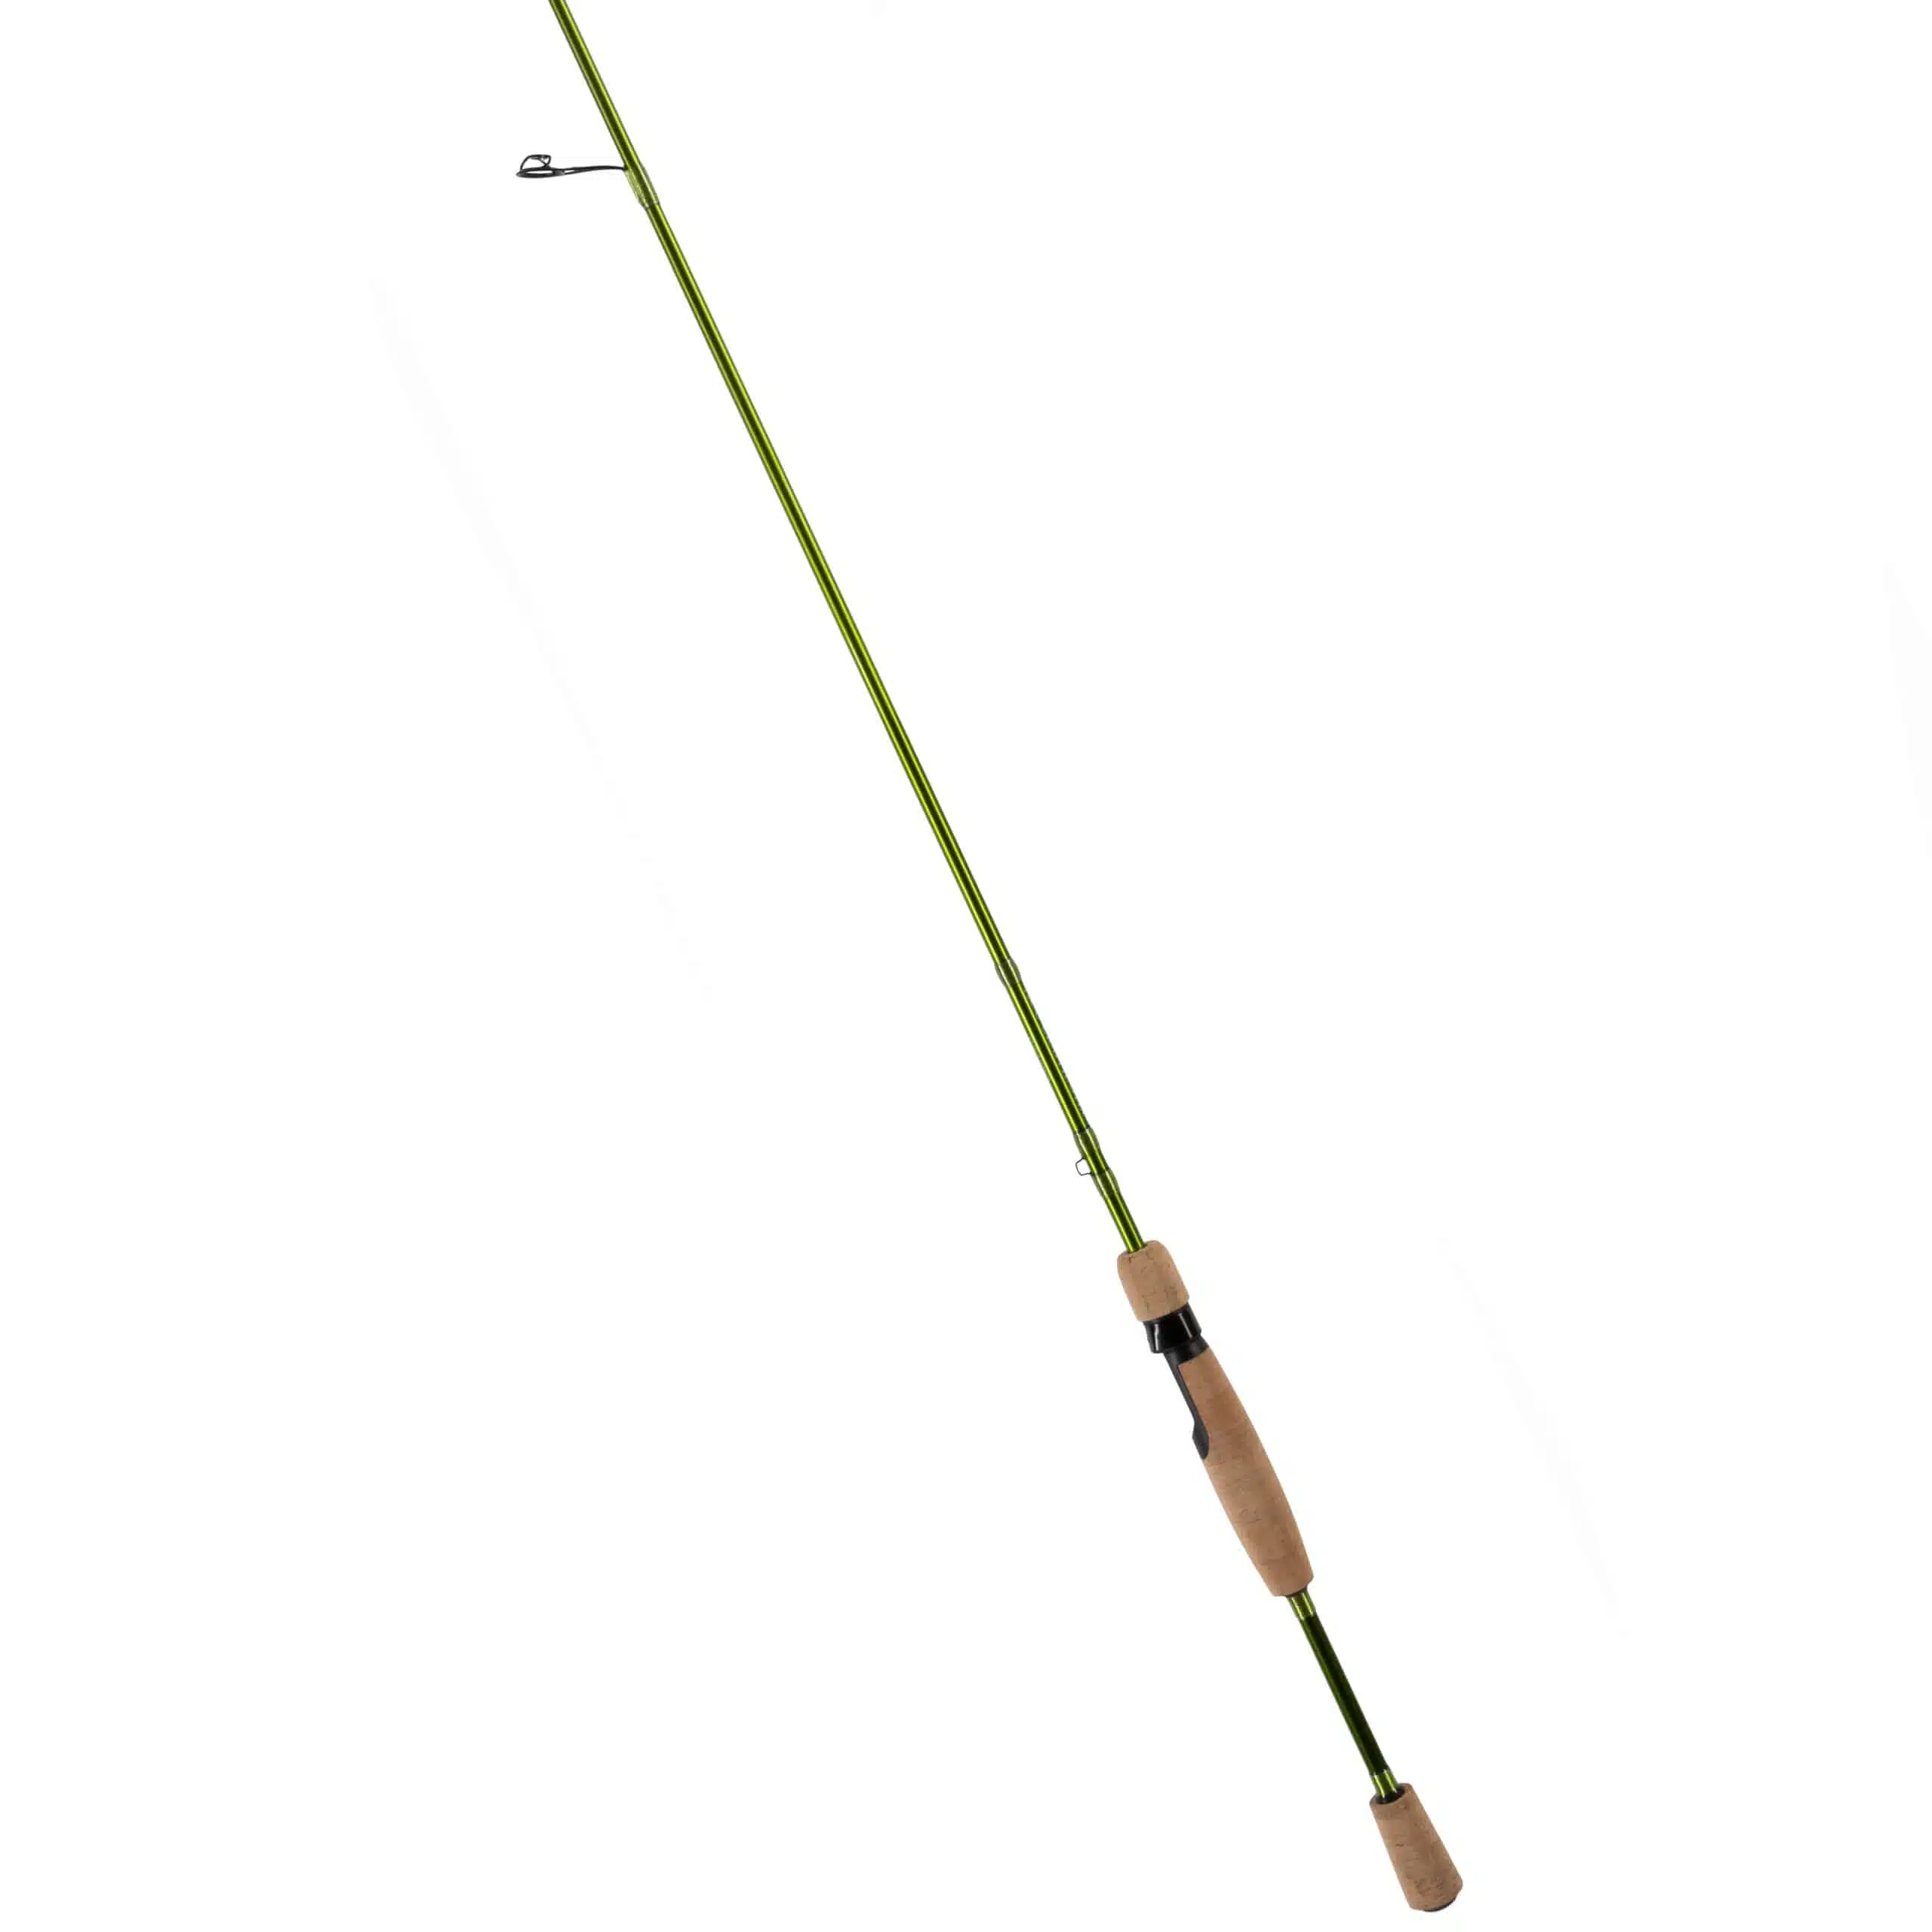 2 Set Replacement Long Handle Soft Rod Cork Grip Fishing Rod Handle + Reel  Seat Repair Tackle